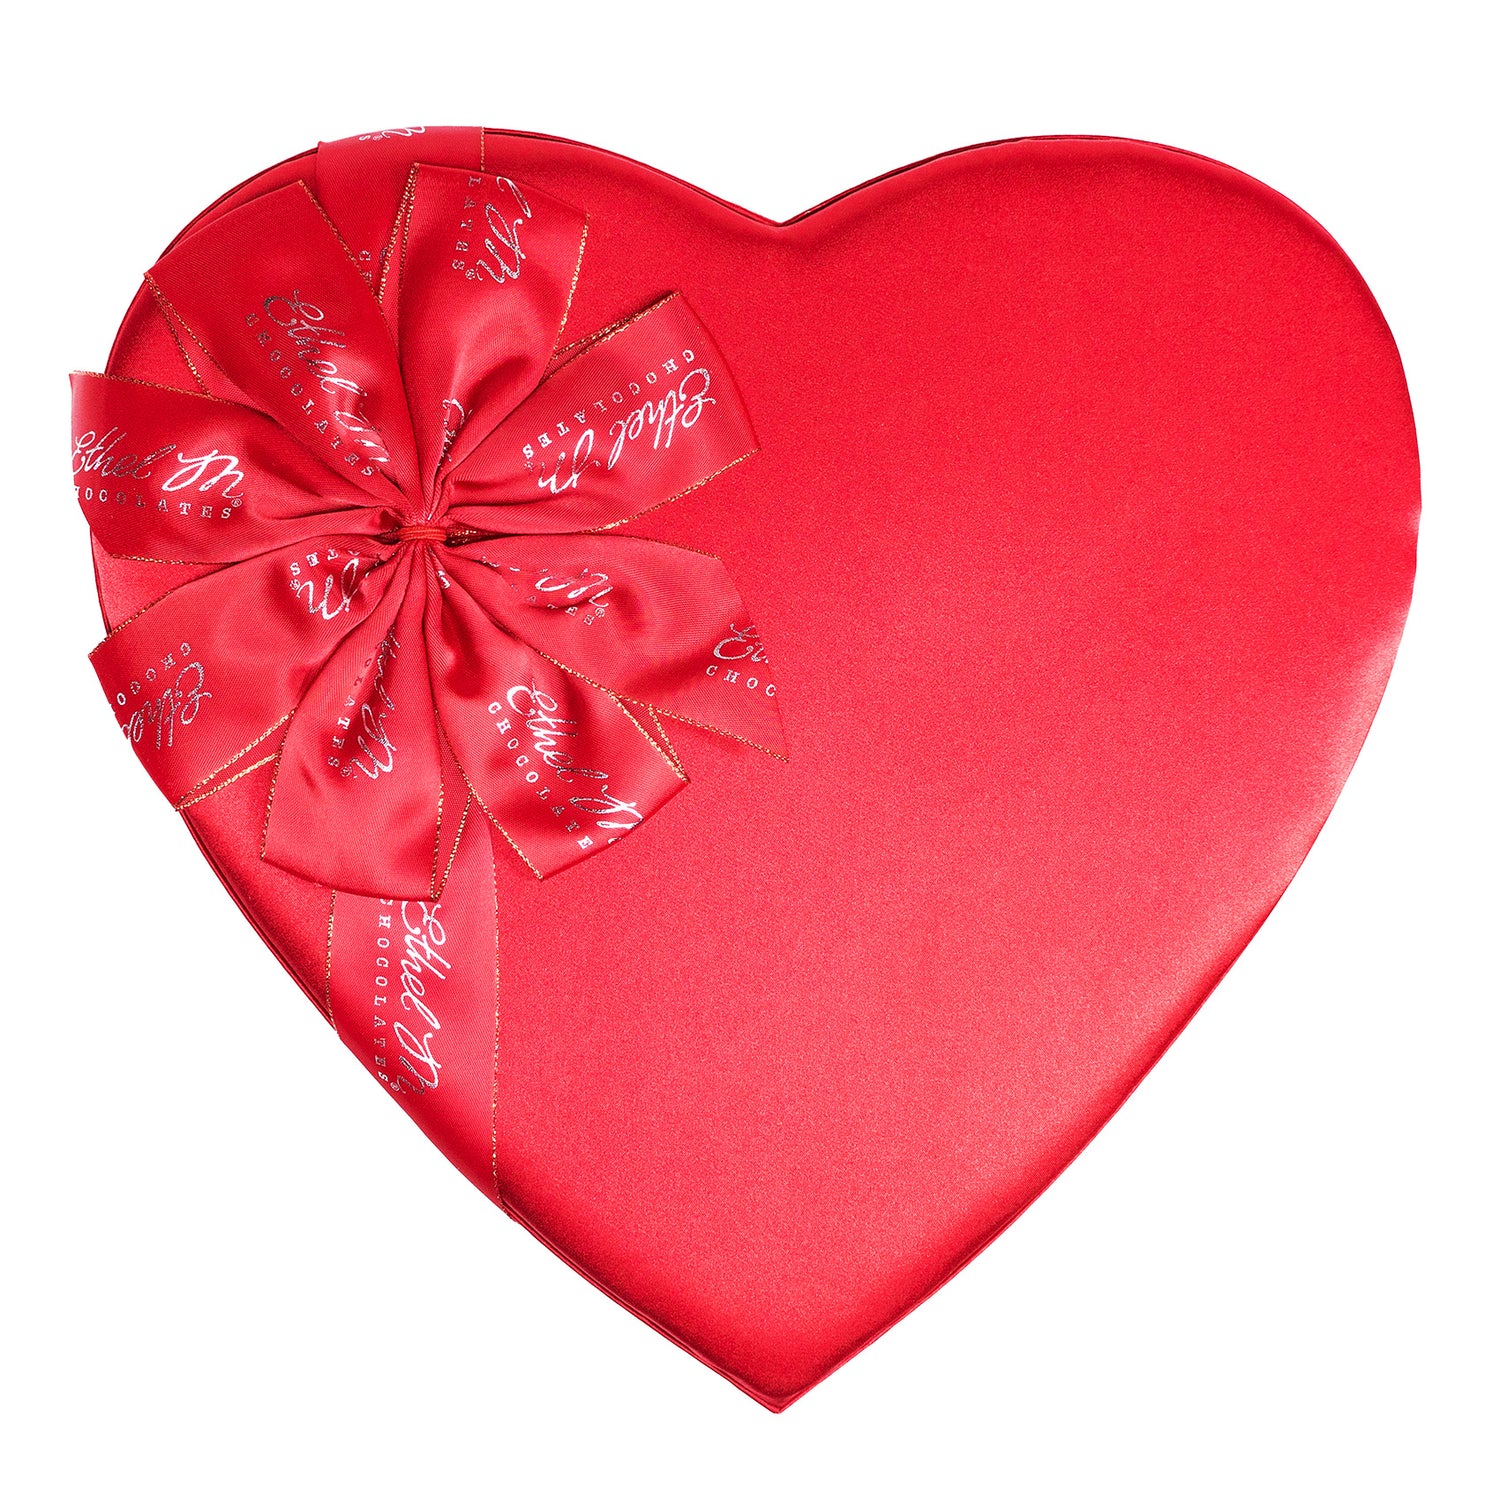 Chocolate Heart Box – The Creative Hub Online